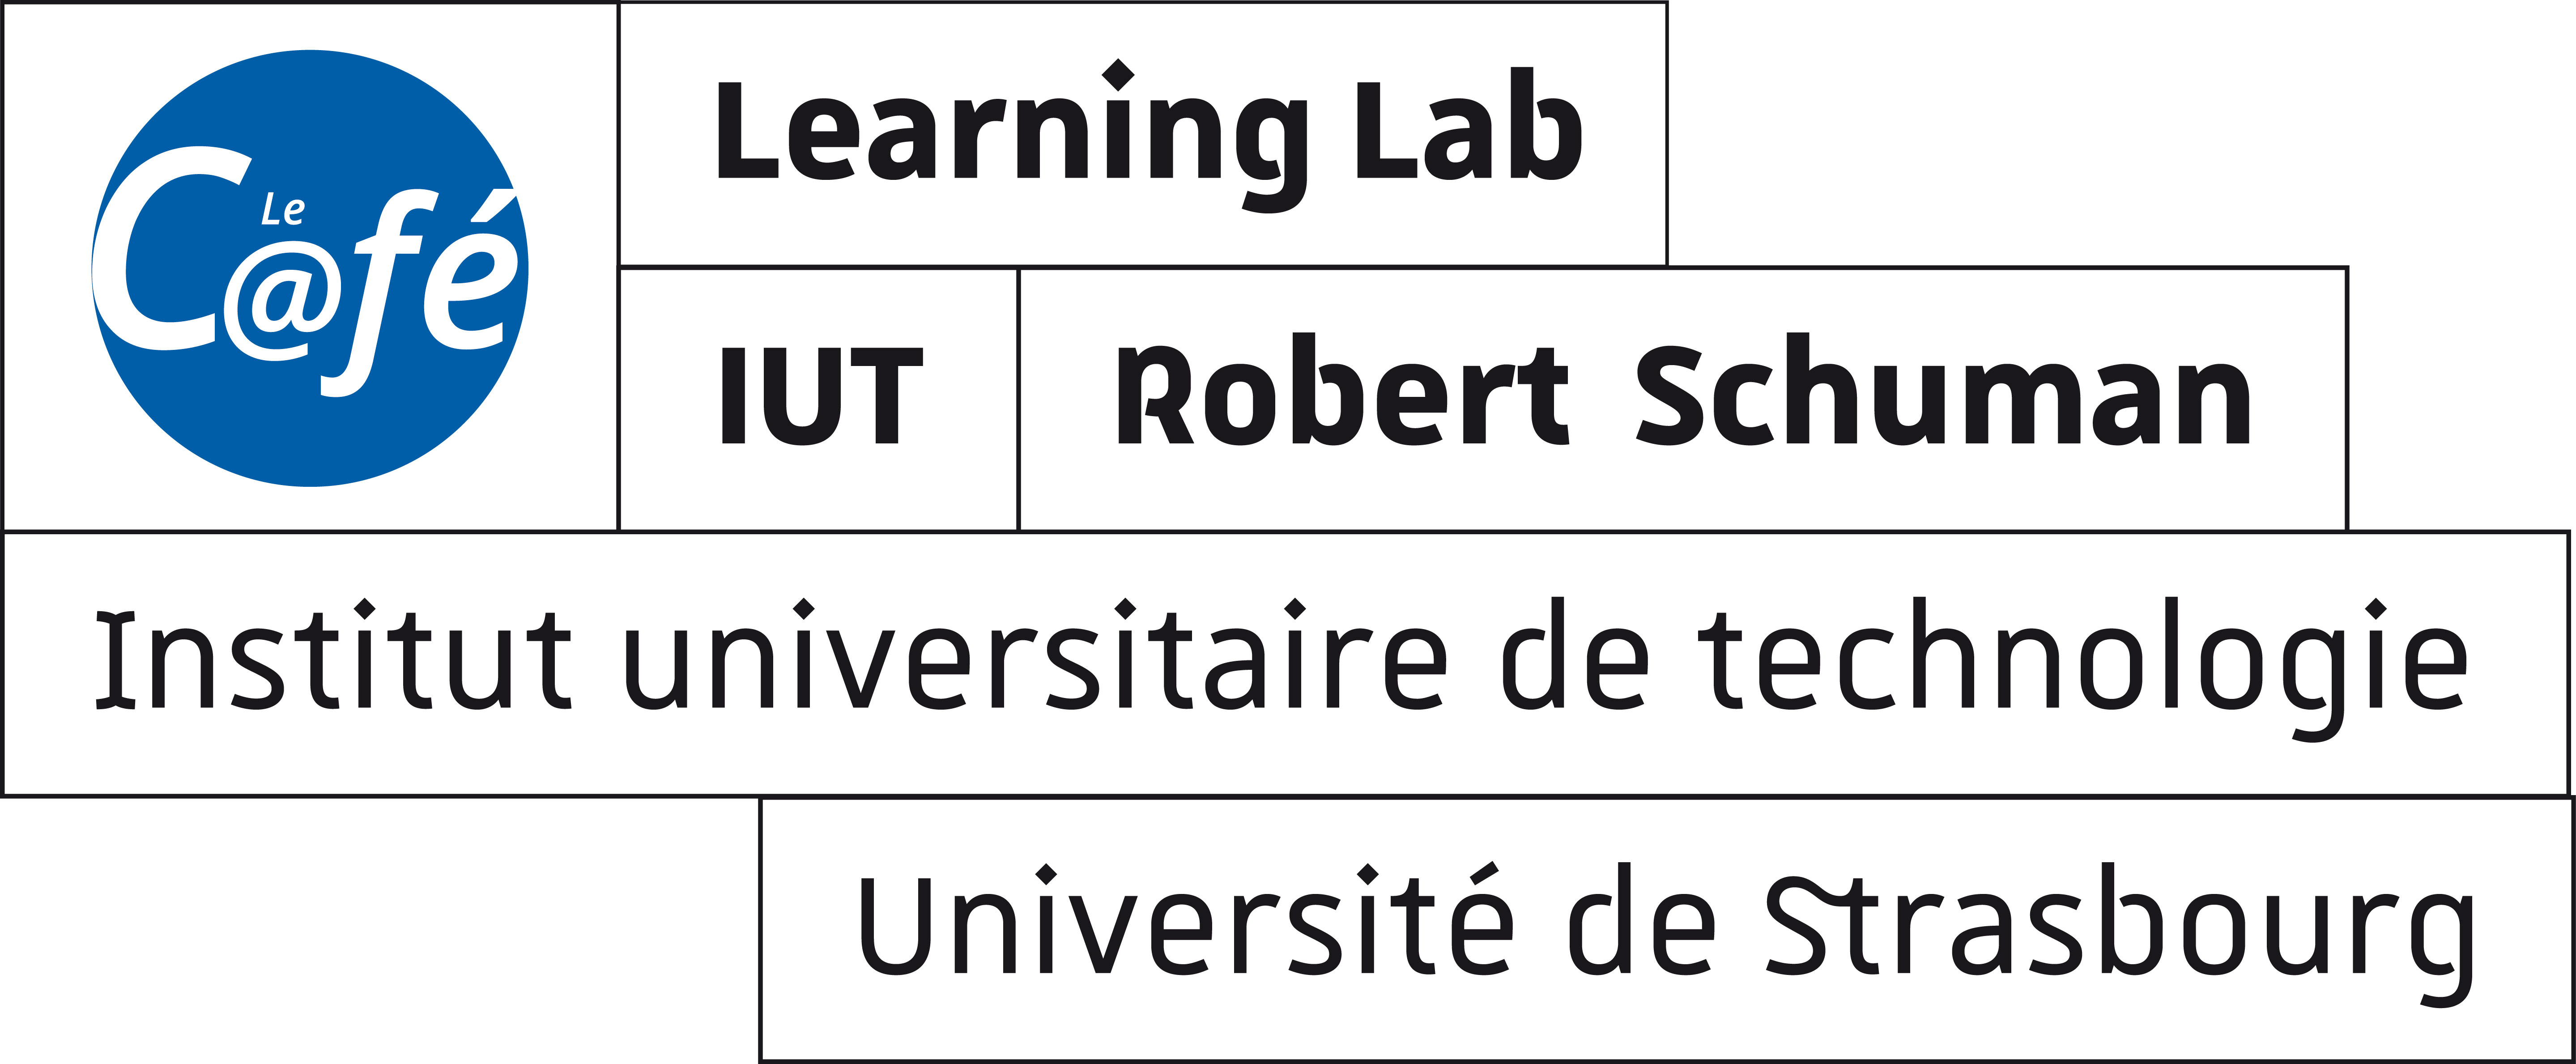 Bannière Cafe Learninglab  - IUTRS